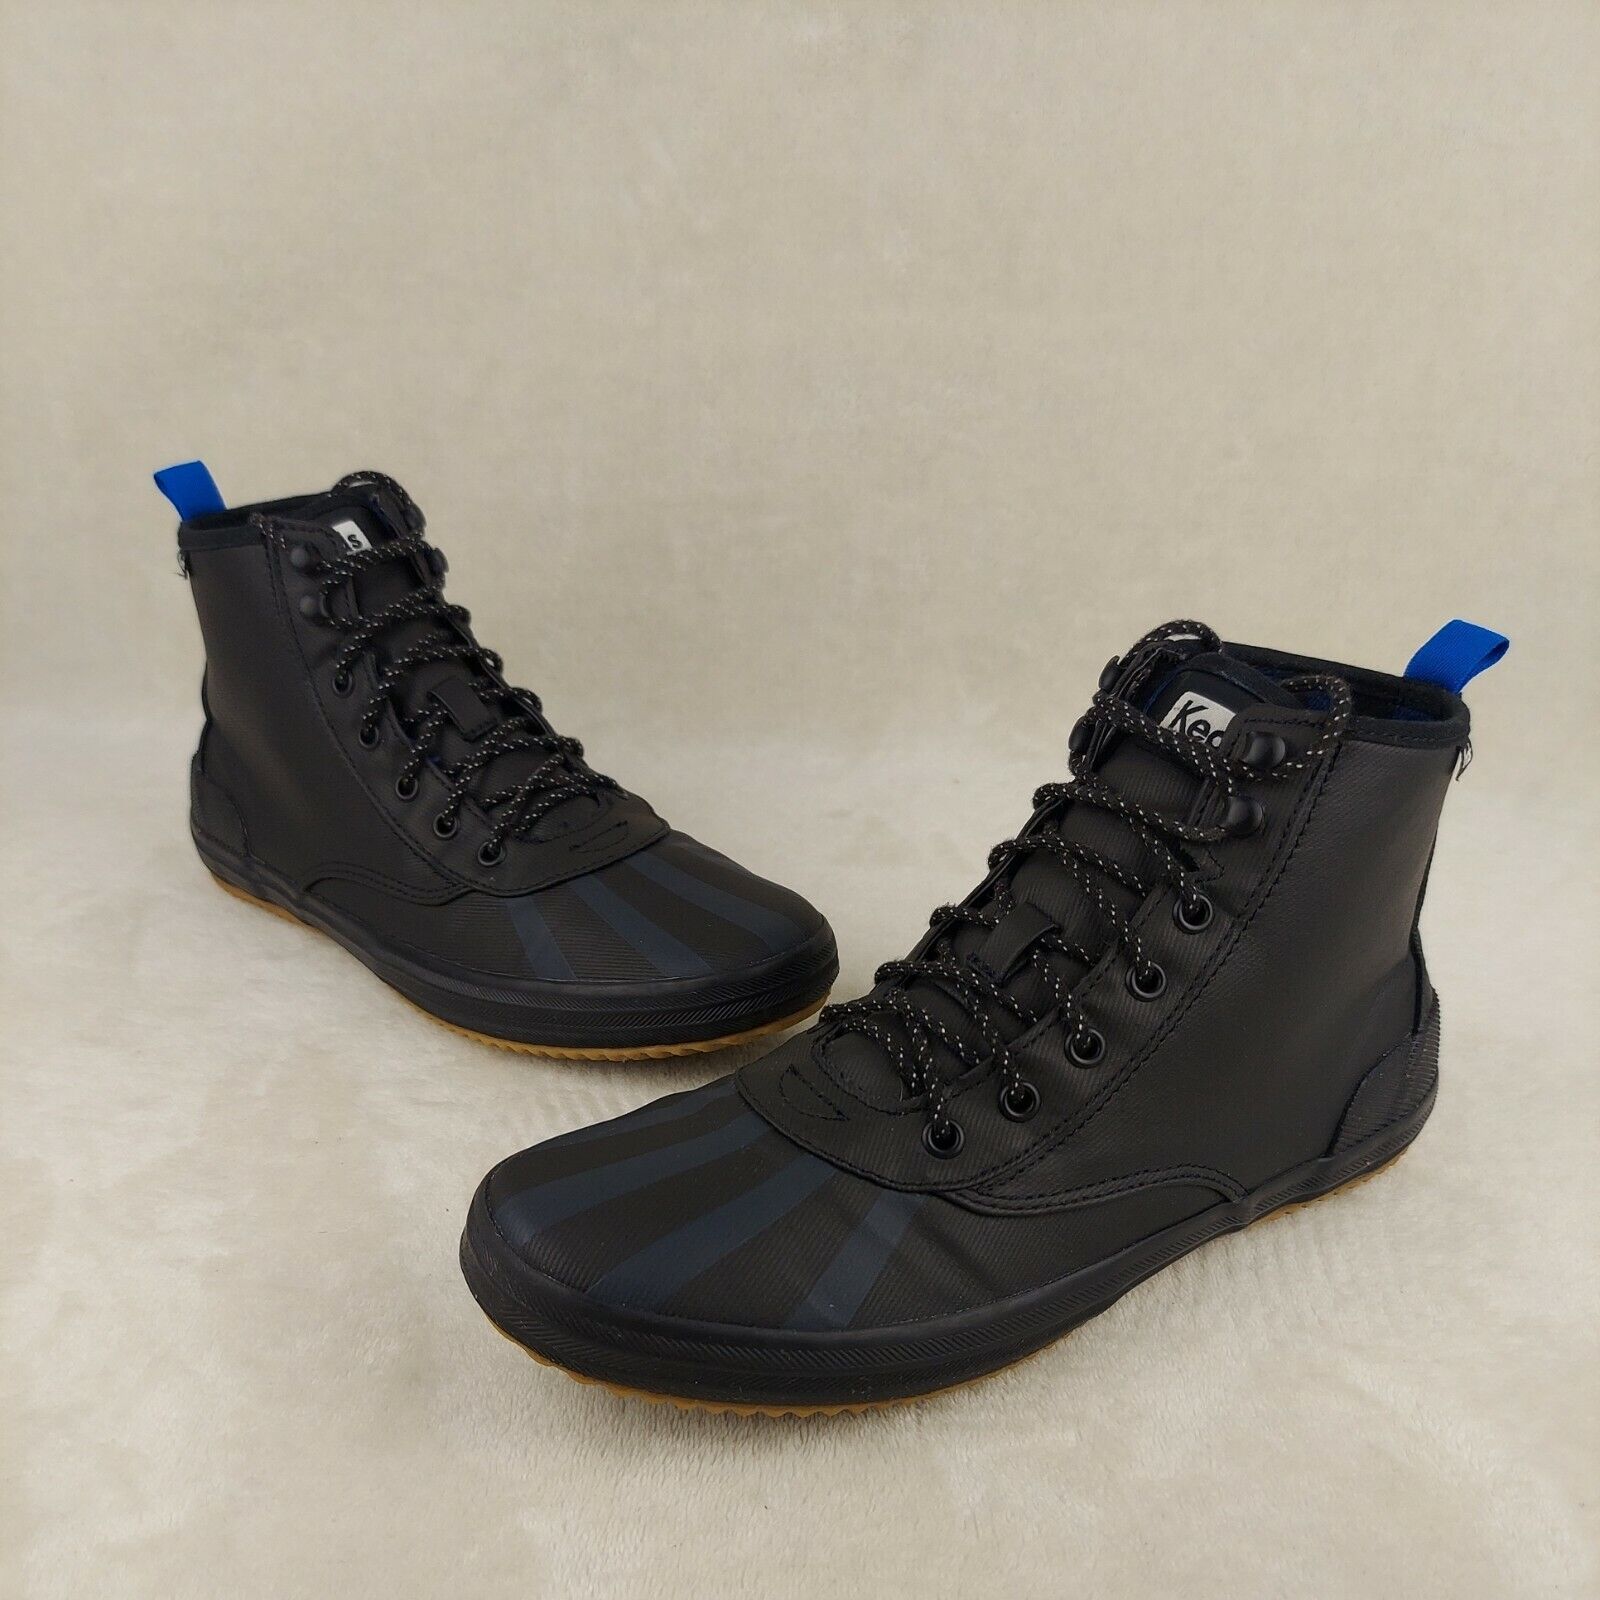 Women's Keds Scout Splash Ortholite Weatherized Boots  # WF57265 NIB $70 MSRP